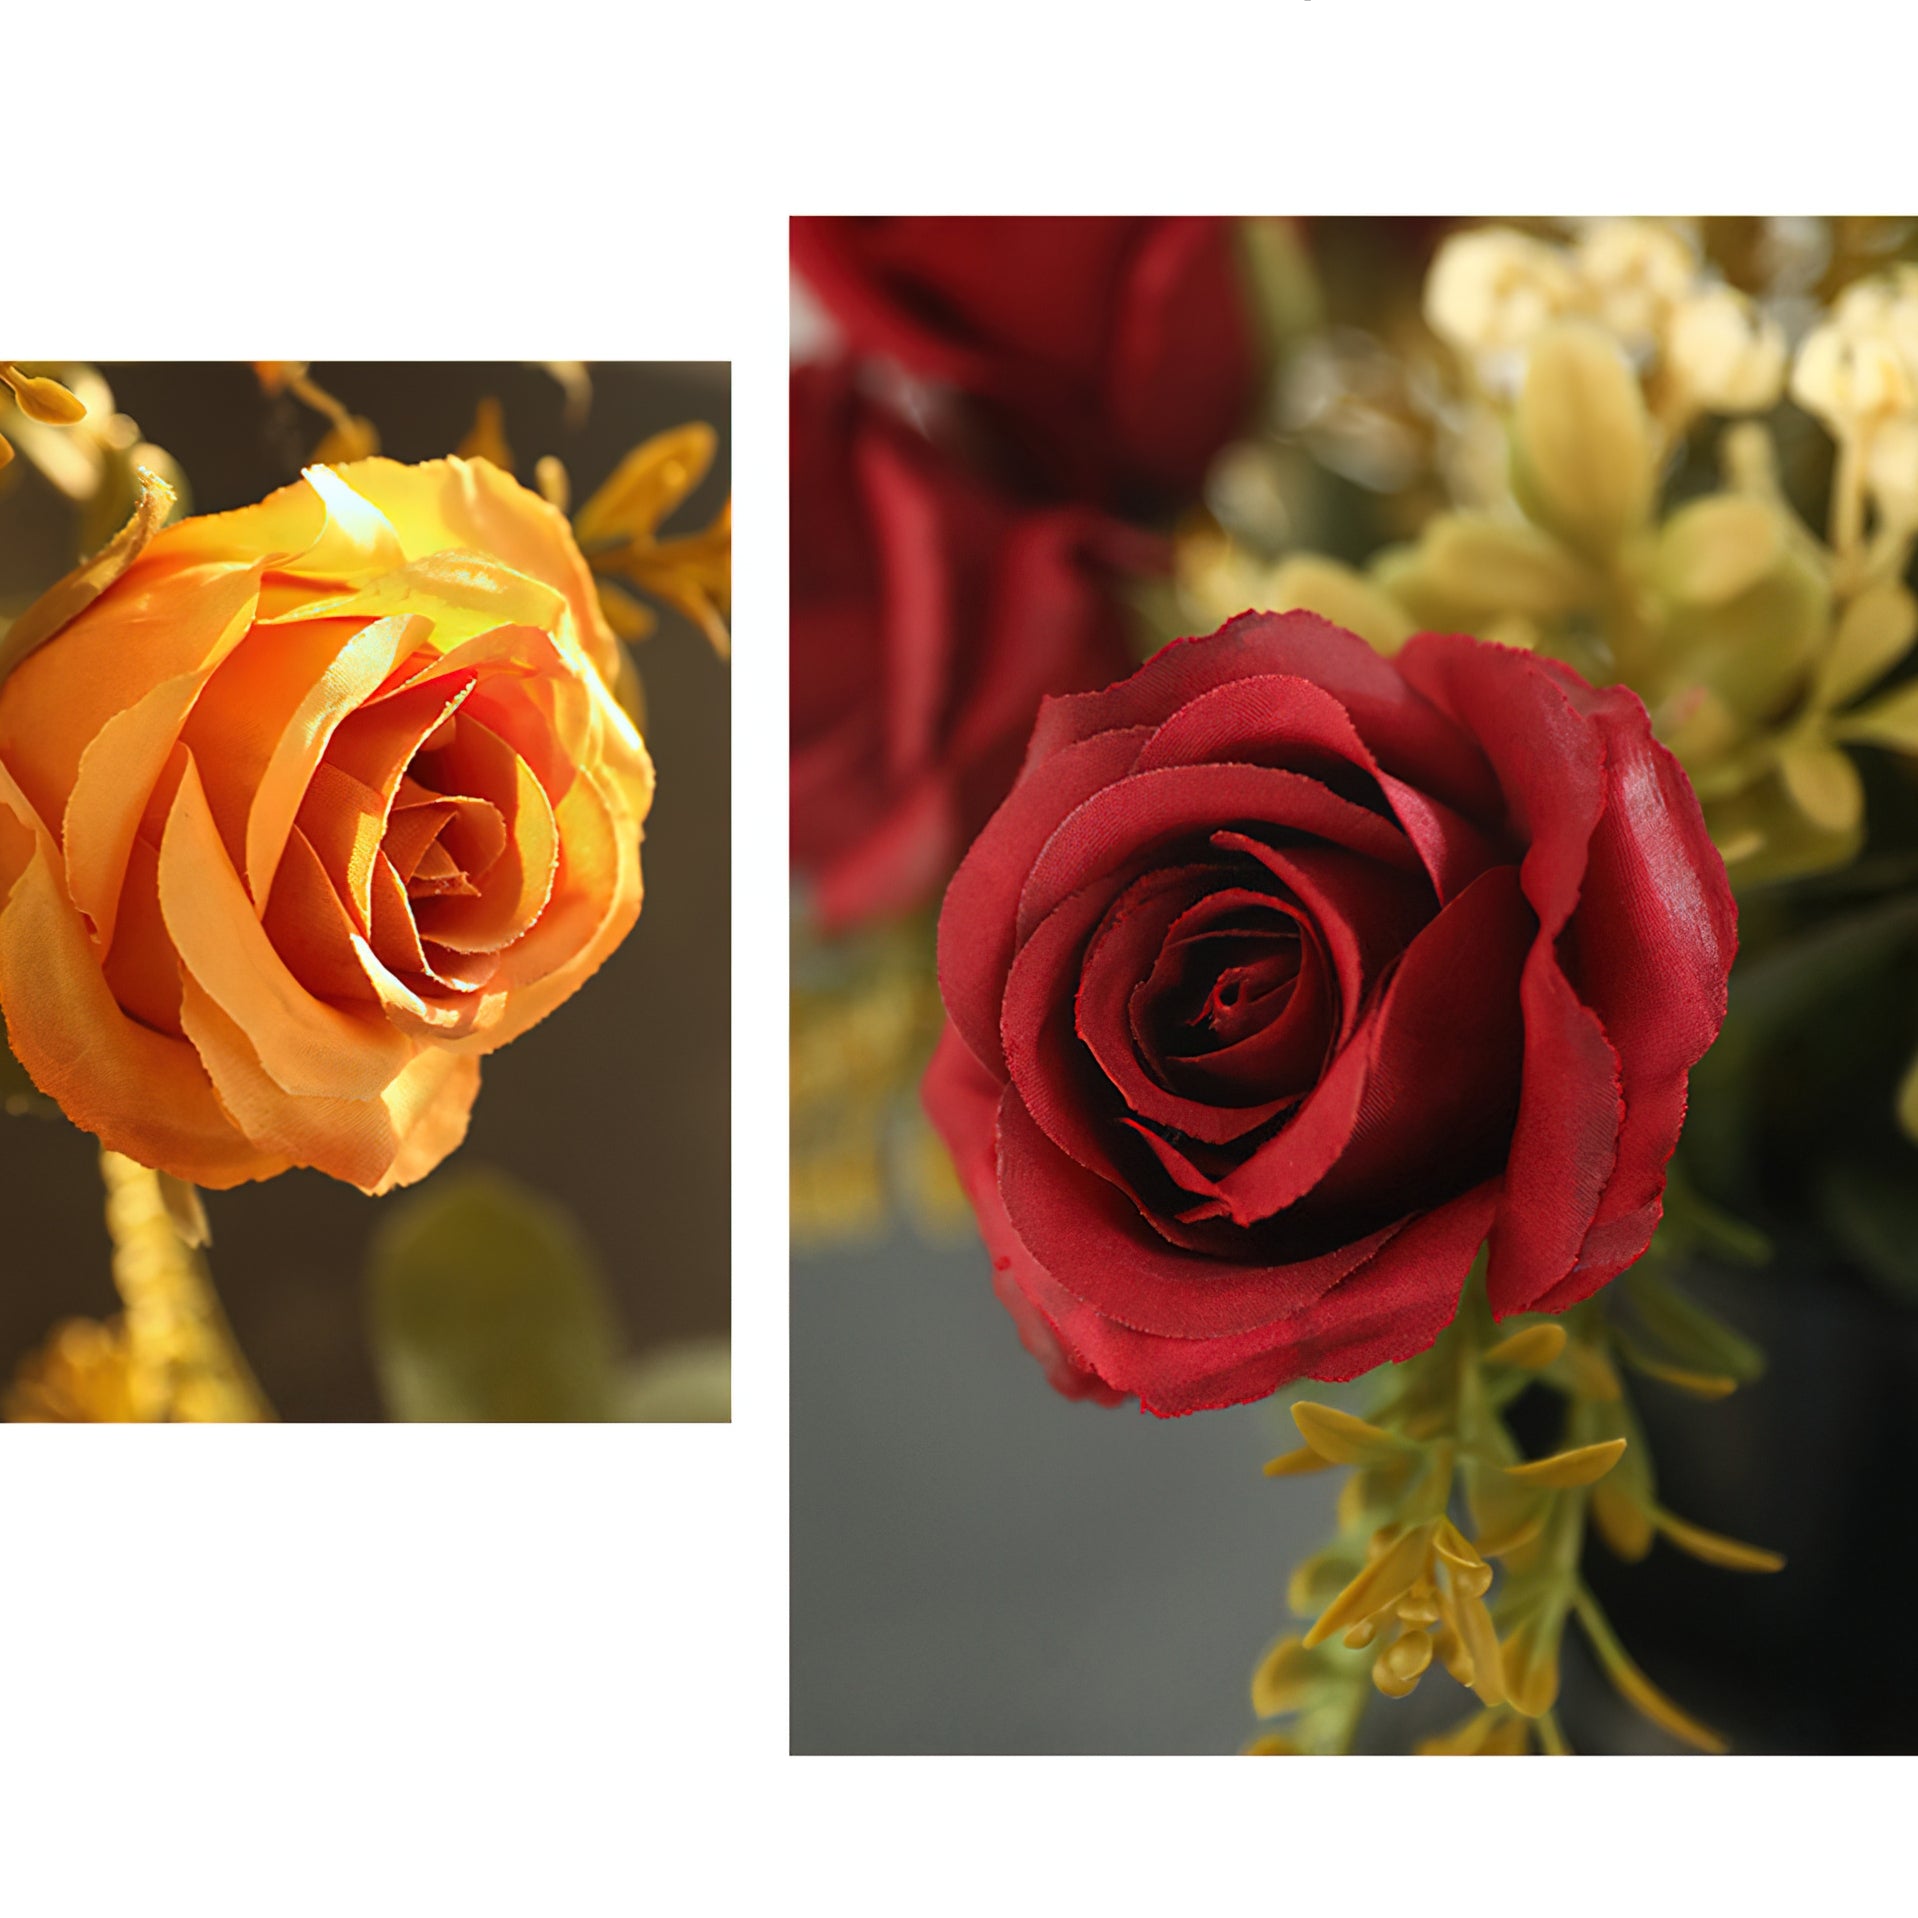 Vintage Silk 7-Heads Rose Artificial Bouquet - Elegant Faux Flowers for Weddings & Home Decor - Perfect for Centerpieces & Presents